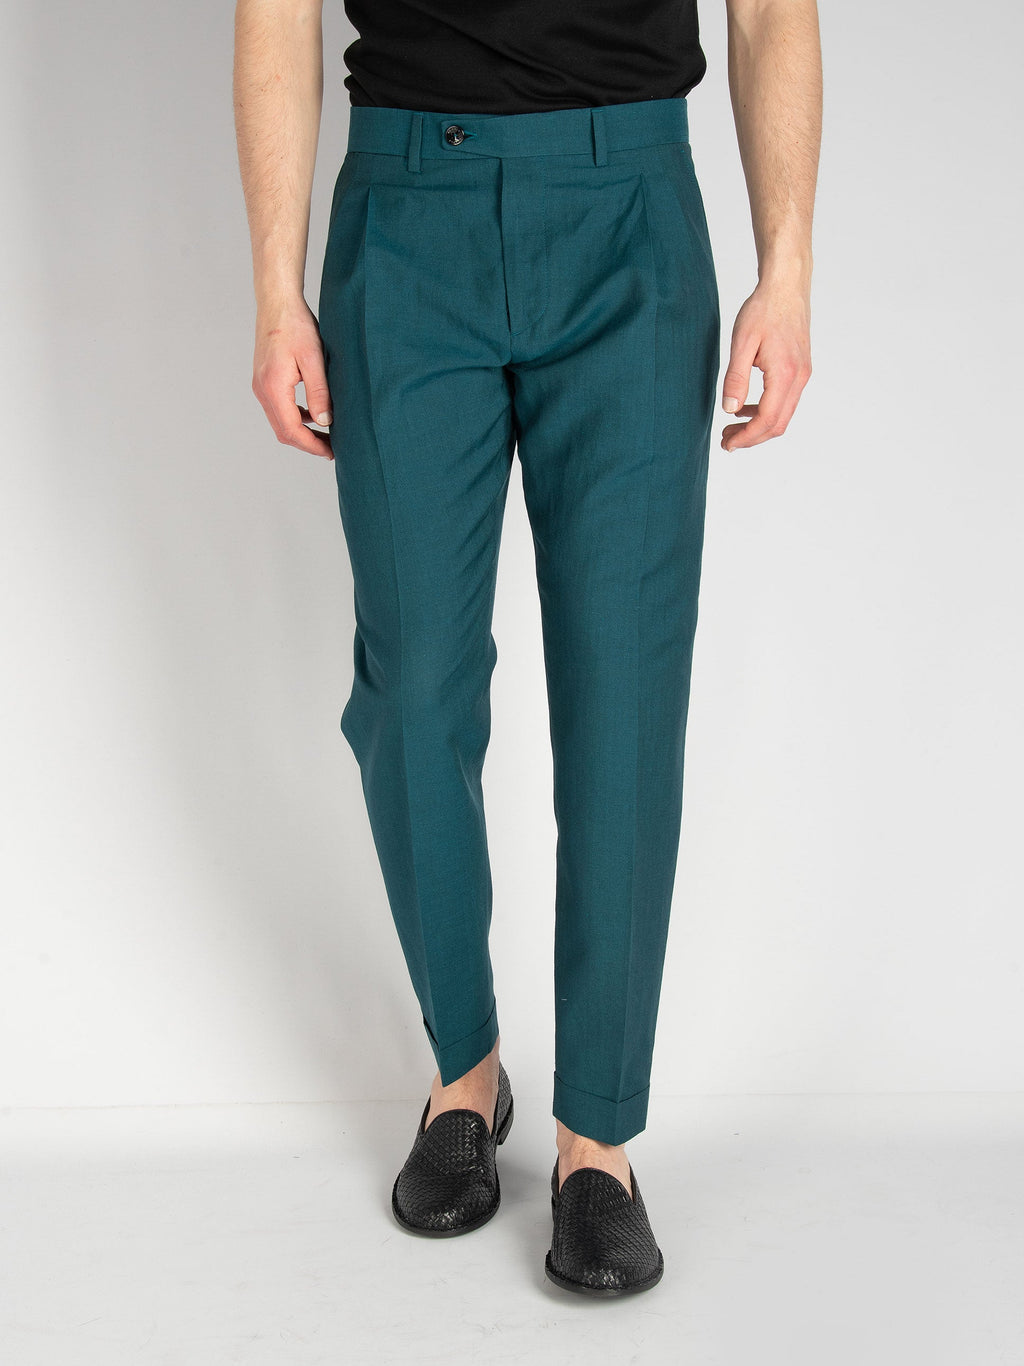 Pantalone Robert - Smeraldo